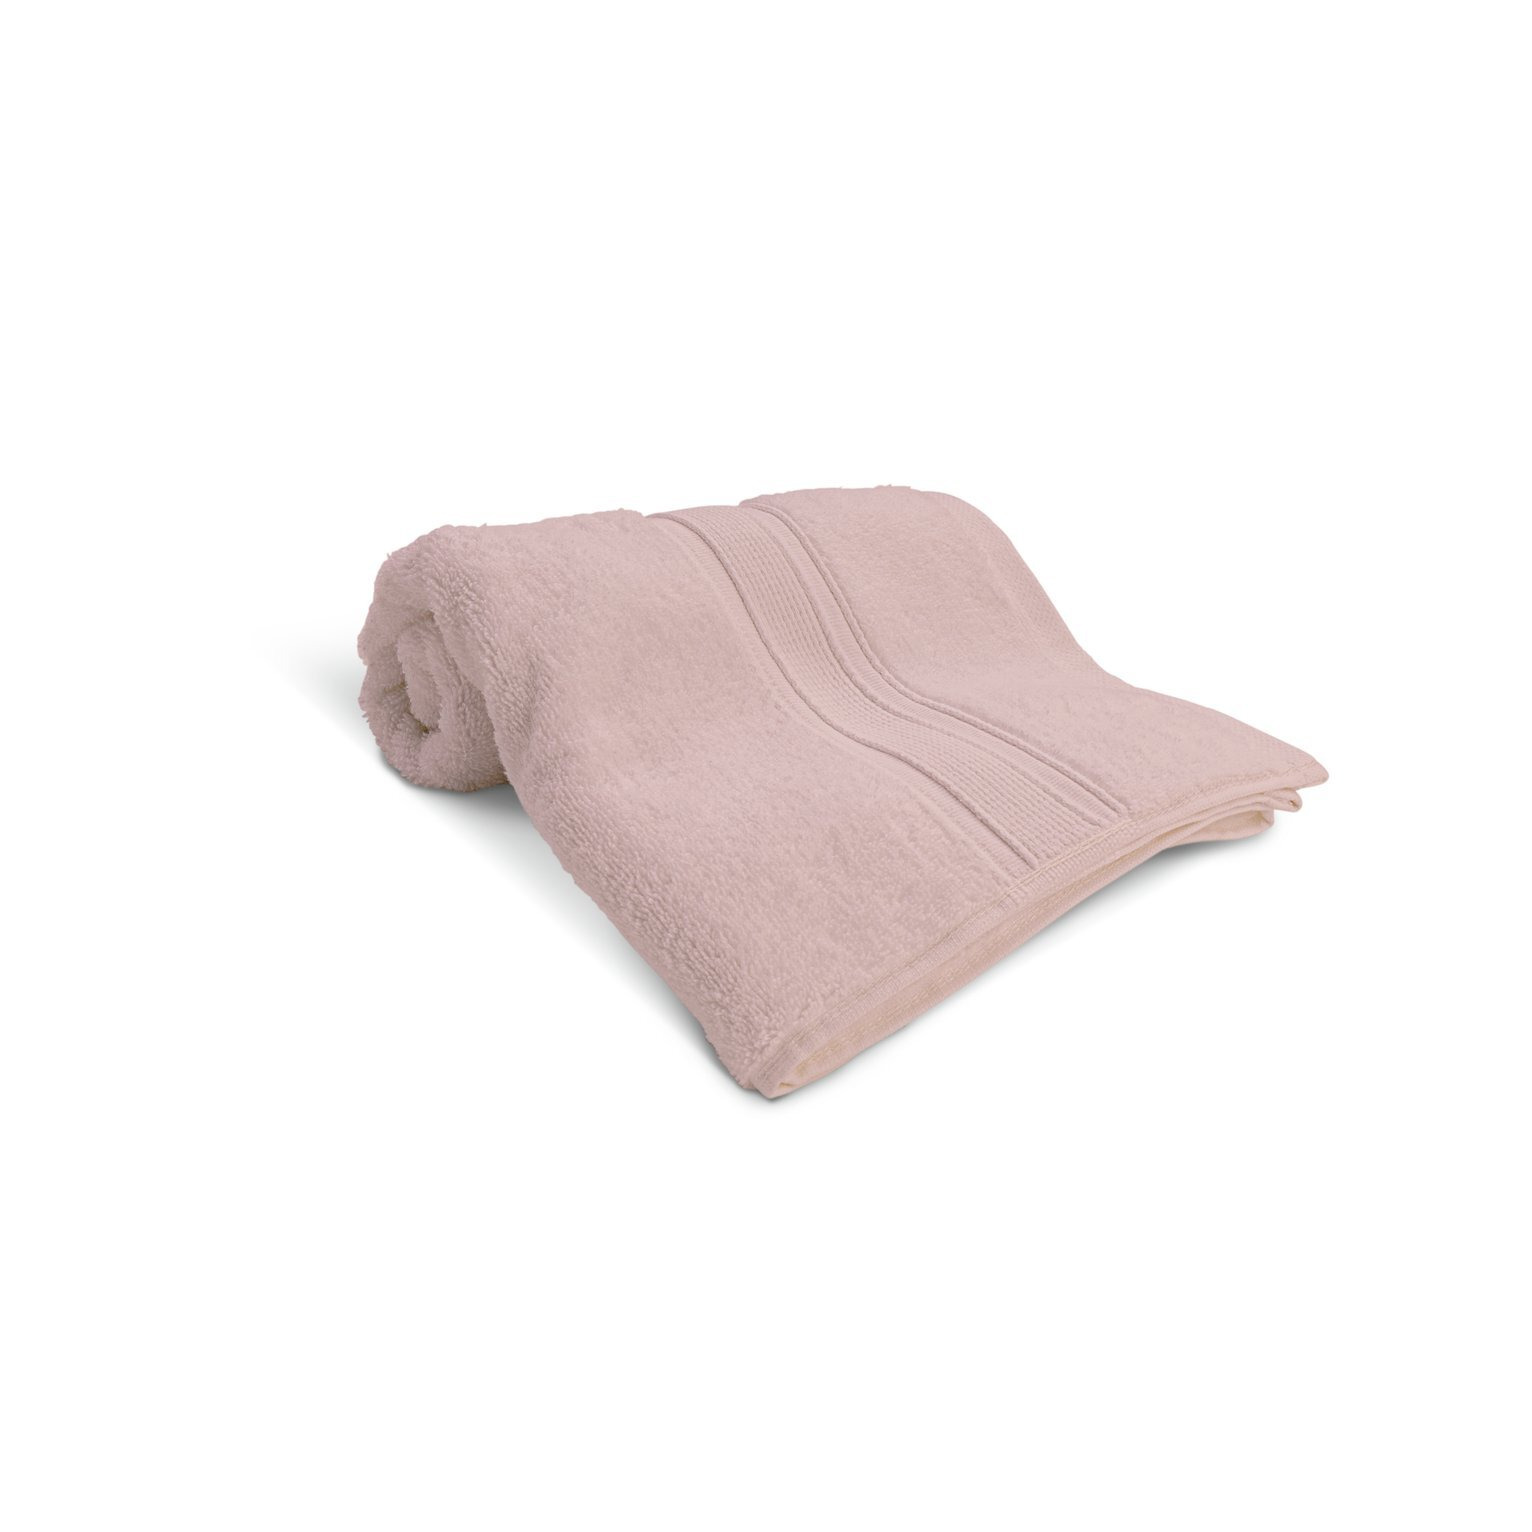 Habitat Cotton Supersoft Hand Towel - Blush Pink - image 1